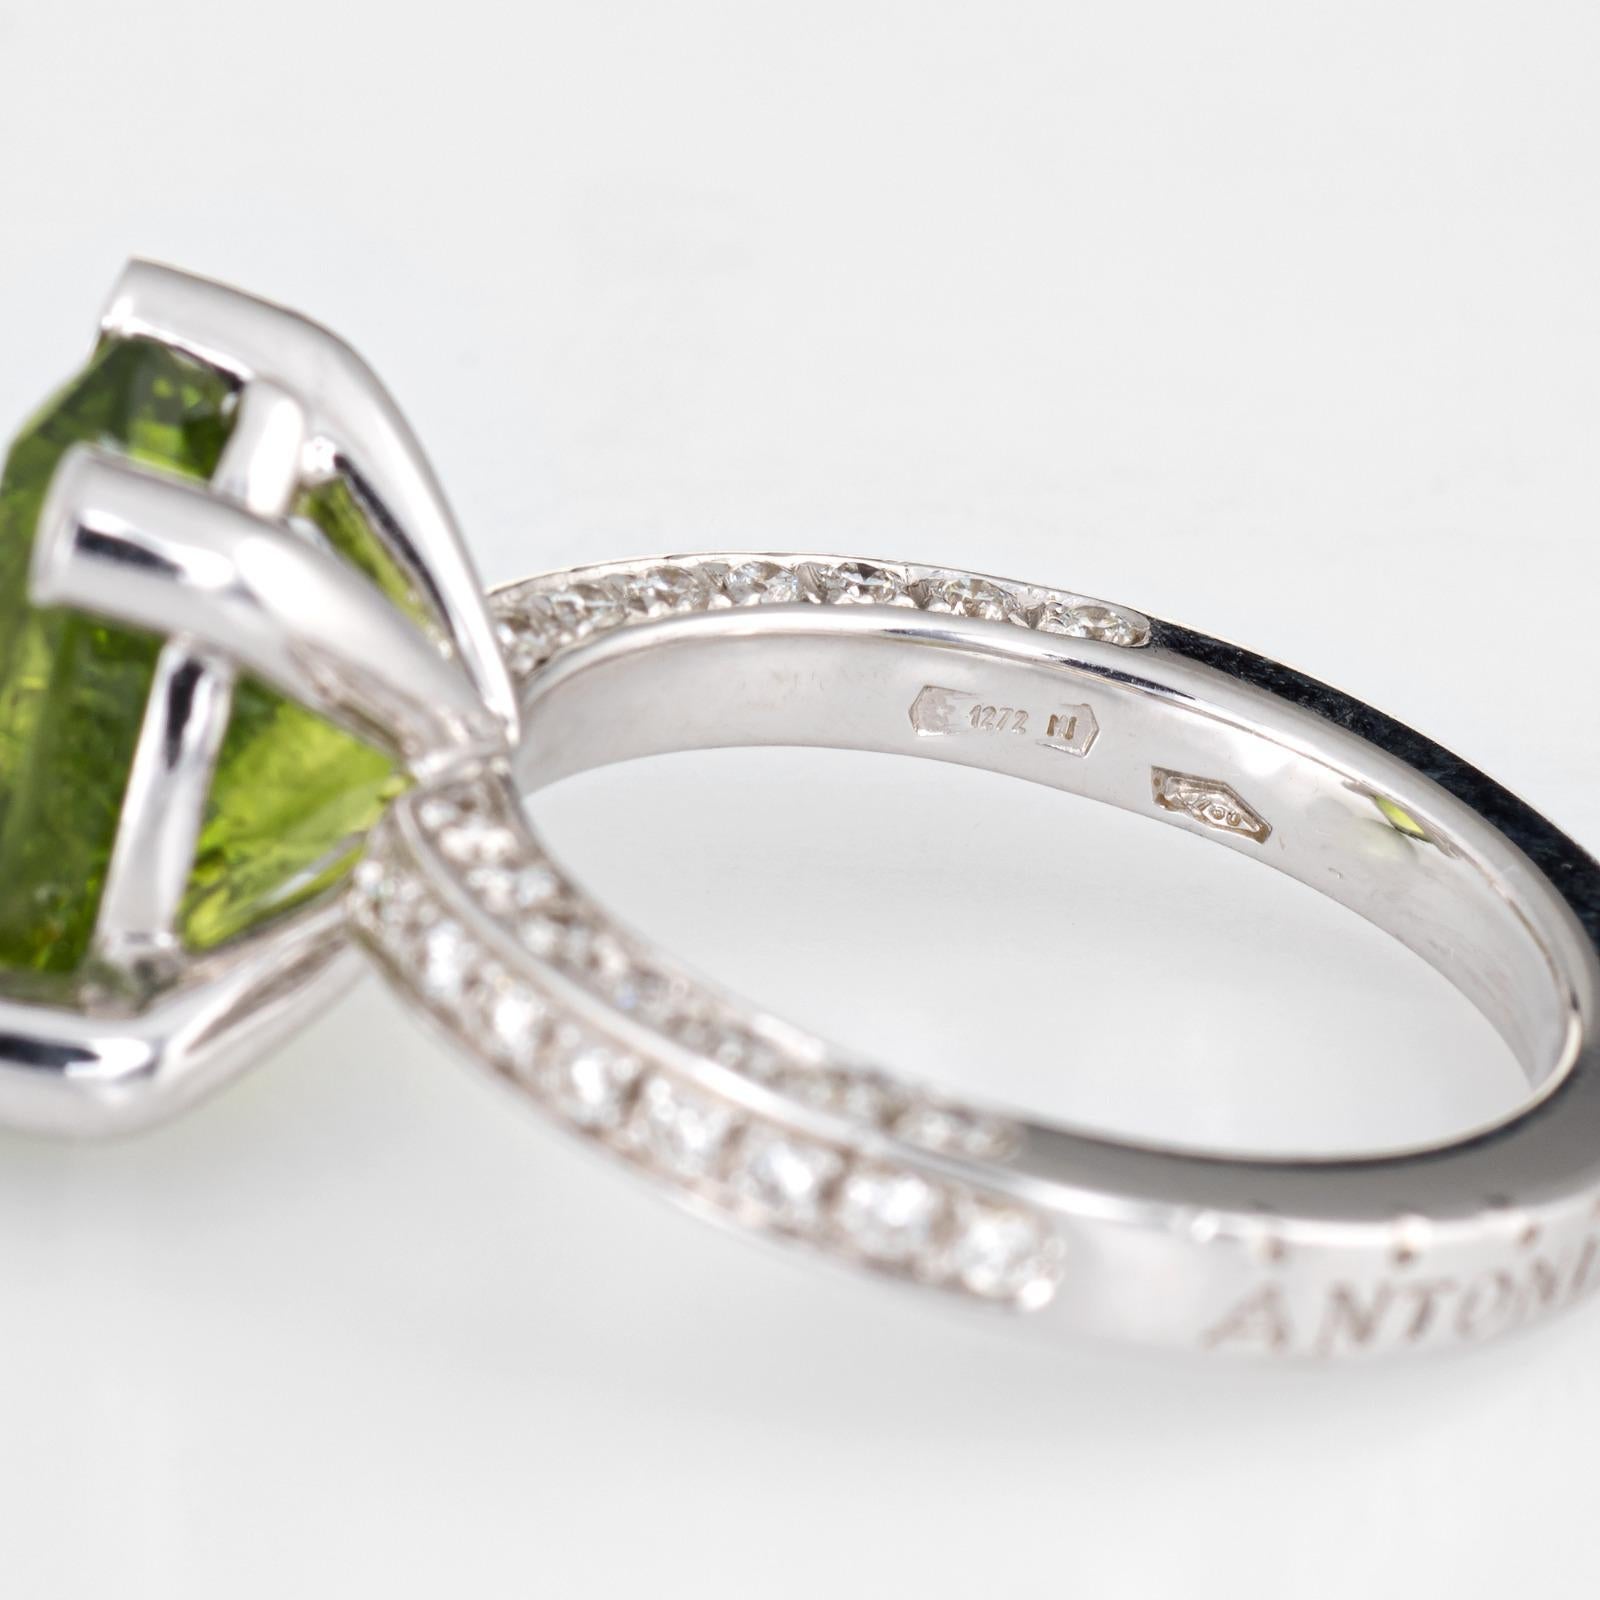 Antonini Peridot Diamond Ring 18k White Gold Fine Designer Jewelry Cocktail In Good Condition For Sale In Torrance, CA